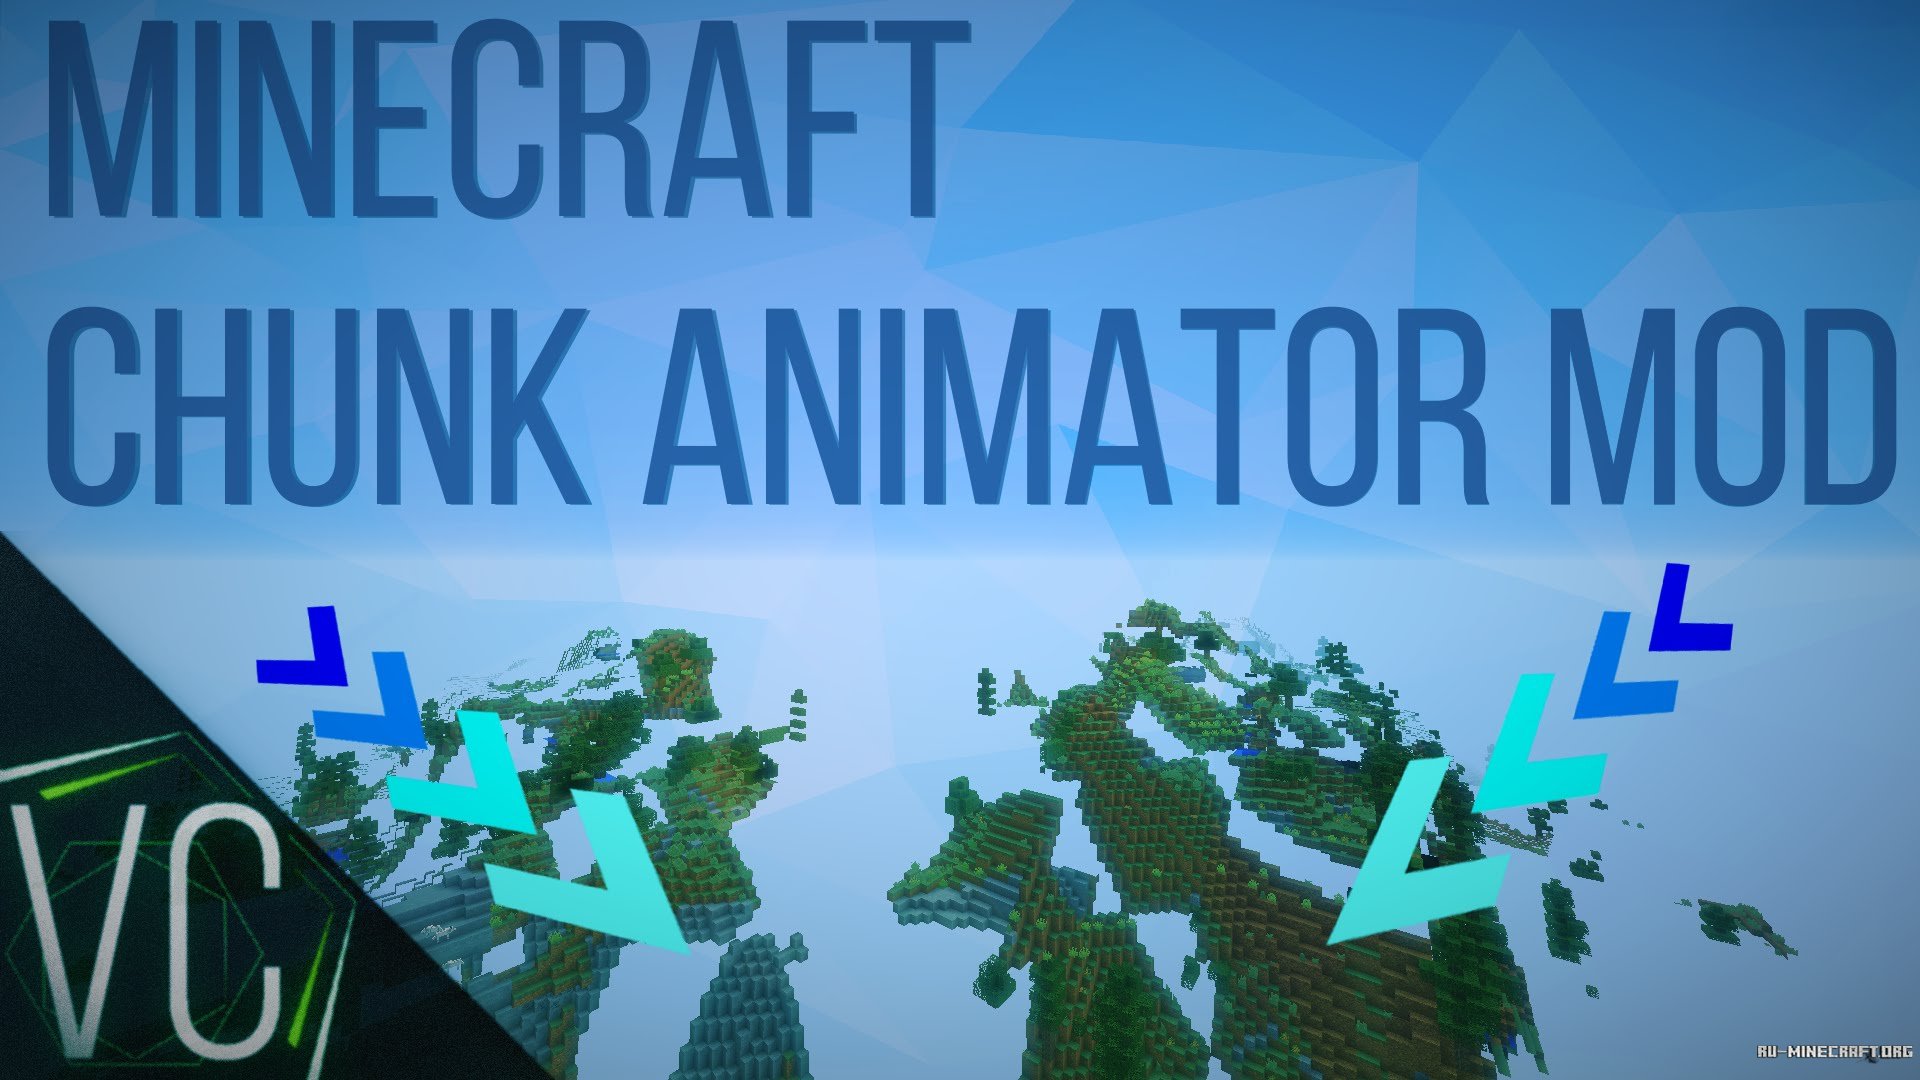 Chunk animator forge. Minecraft Mod chunk Animator. Chunk Animator 1.12.2. Мод chunk Animator 1.12.2. Chunk Animator 1.16.5.